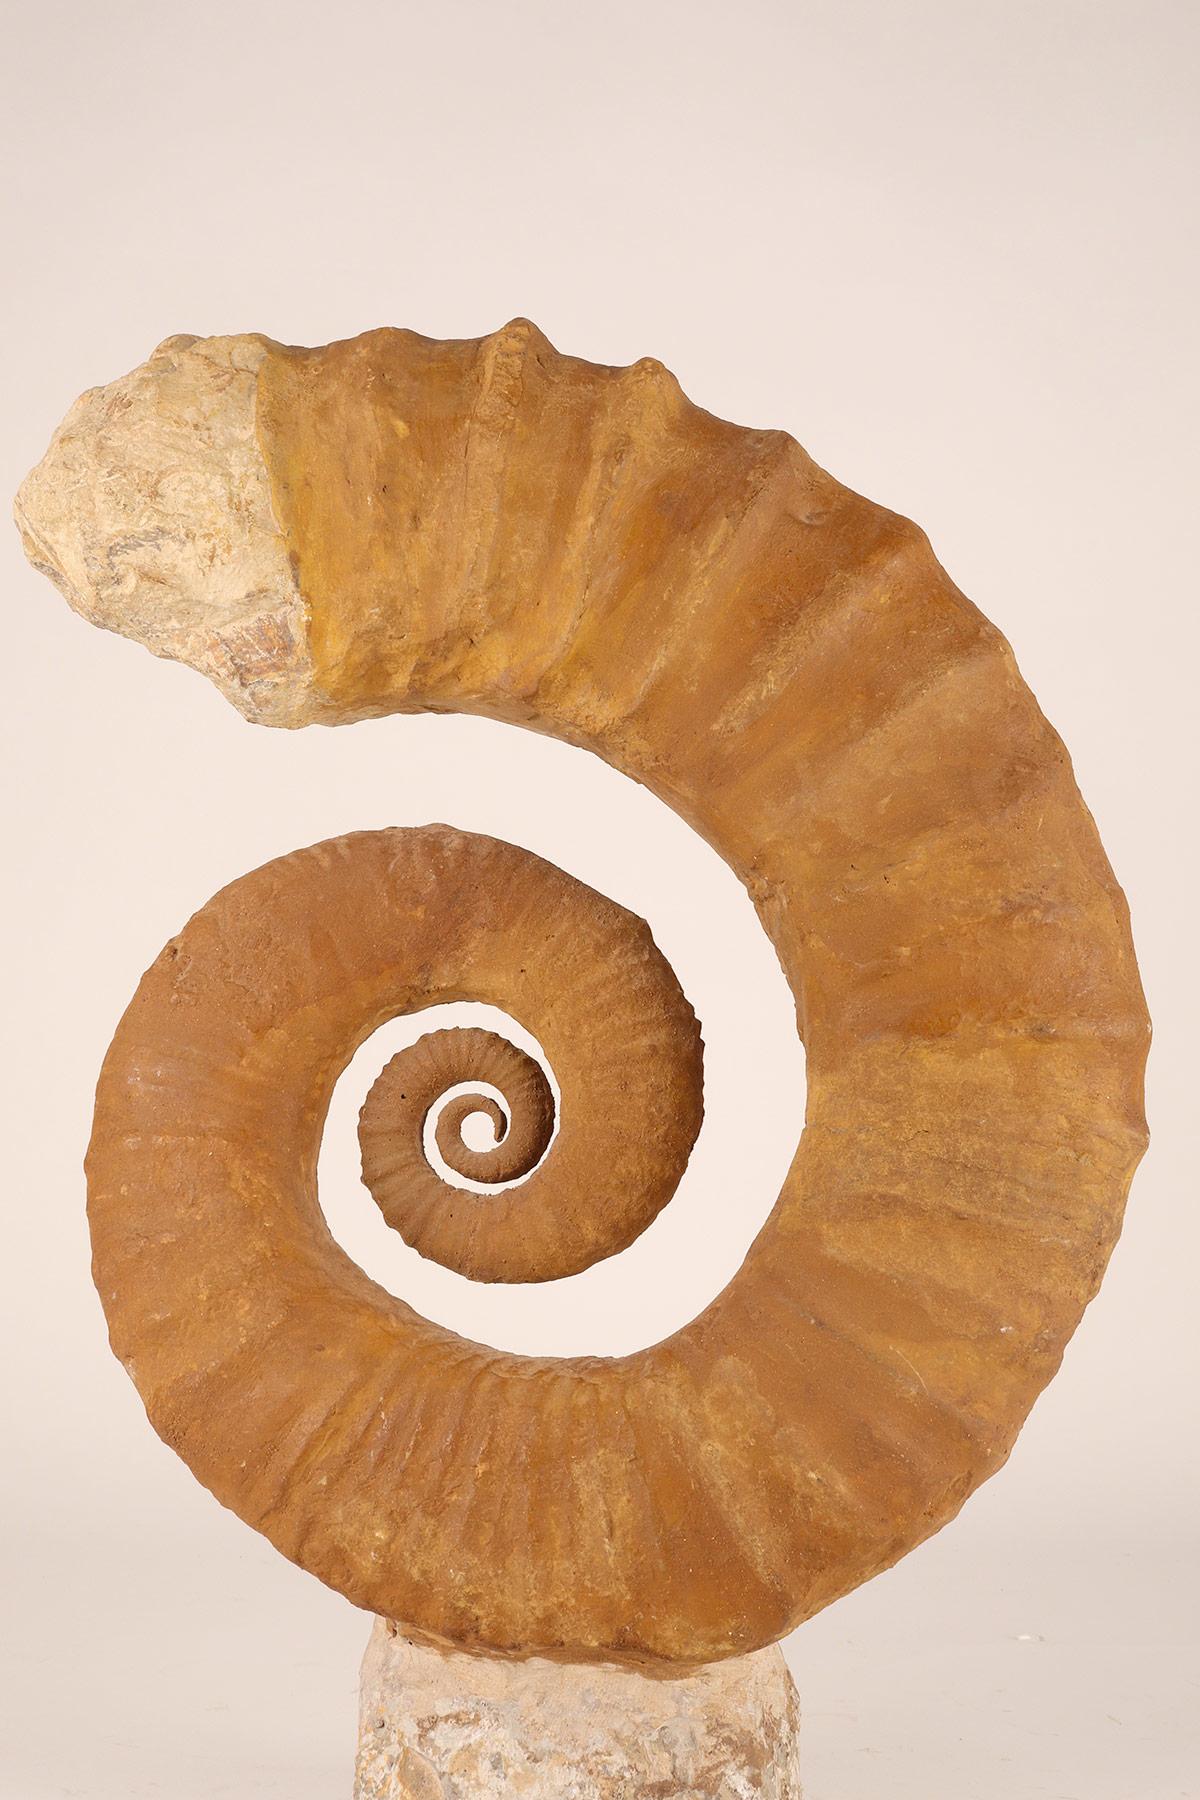 18th Century and Earlier Large Open Coil Heteromorph Ammonite Fossil Specimen, France